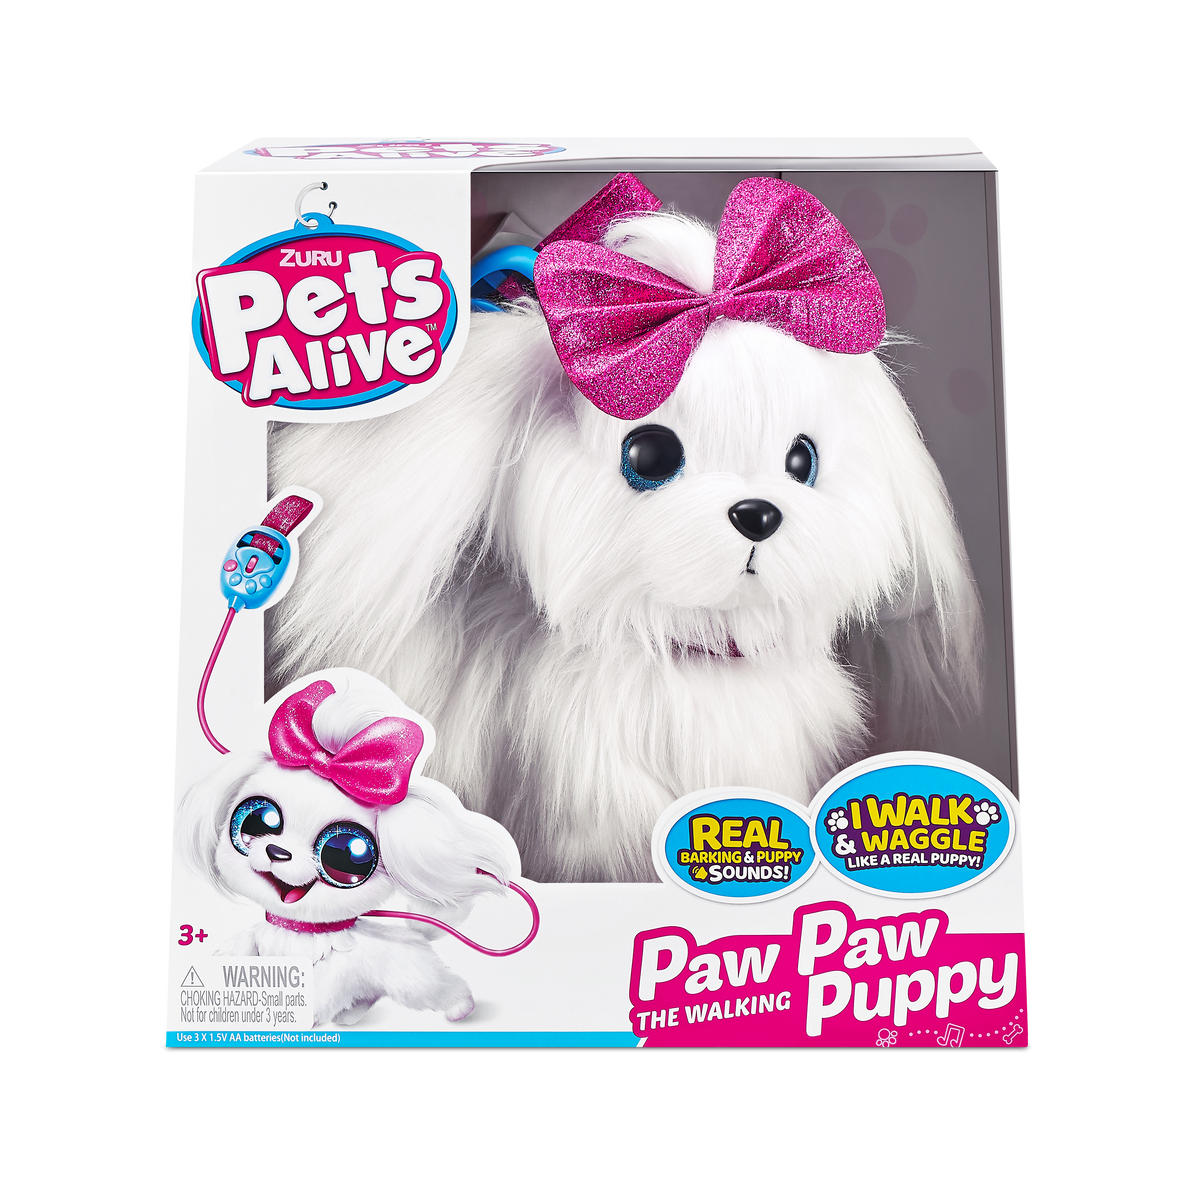 PAKA PETS ALIVE Paw Paw the Walking Puppy S1